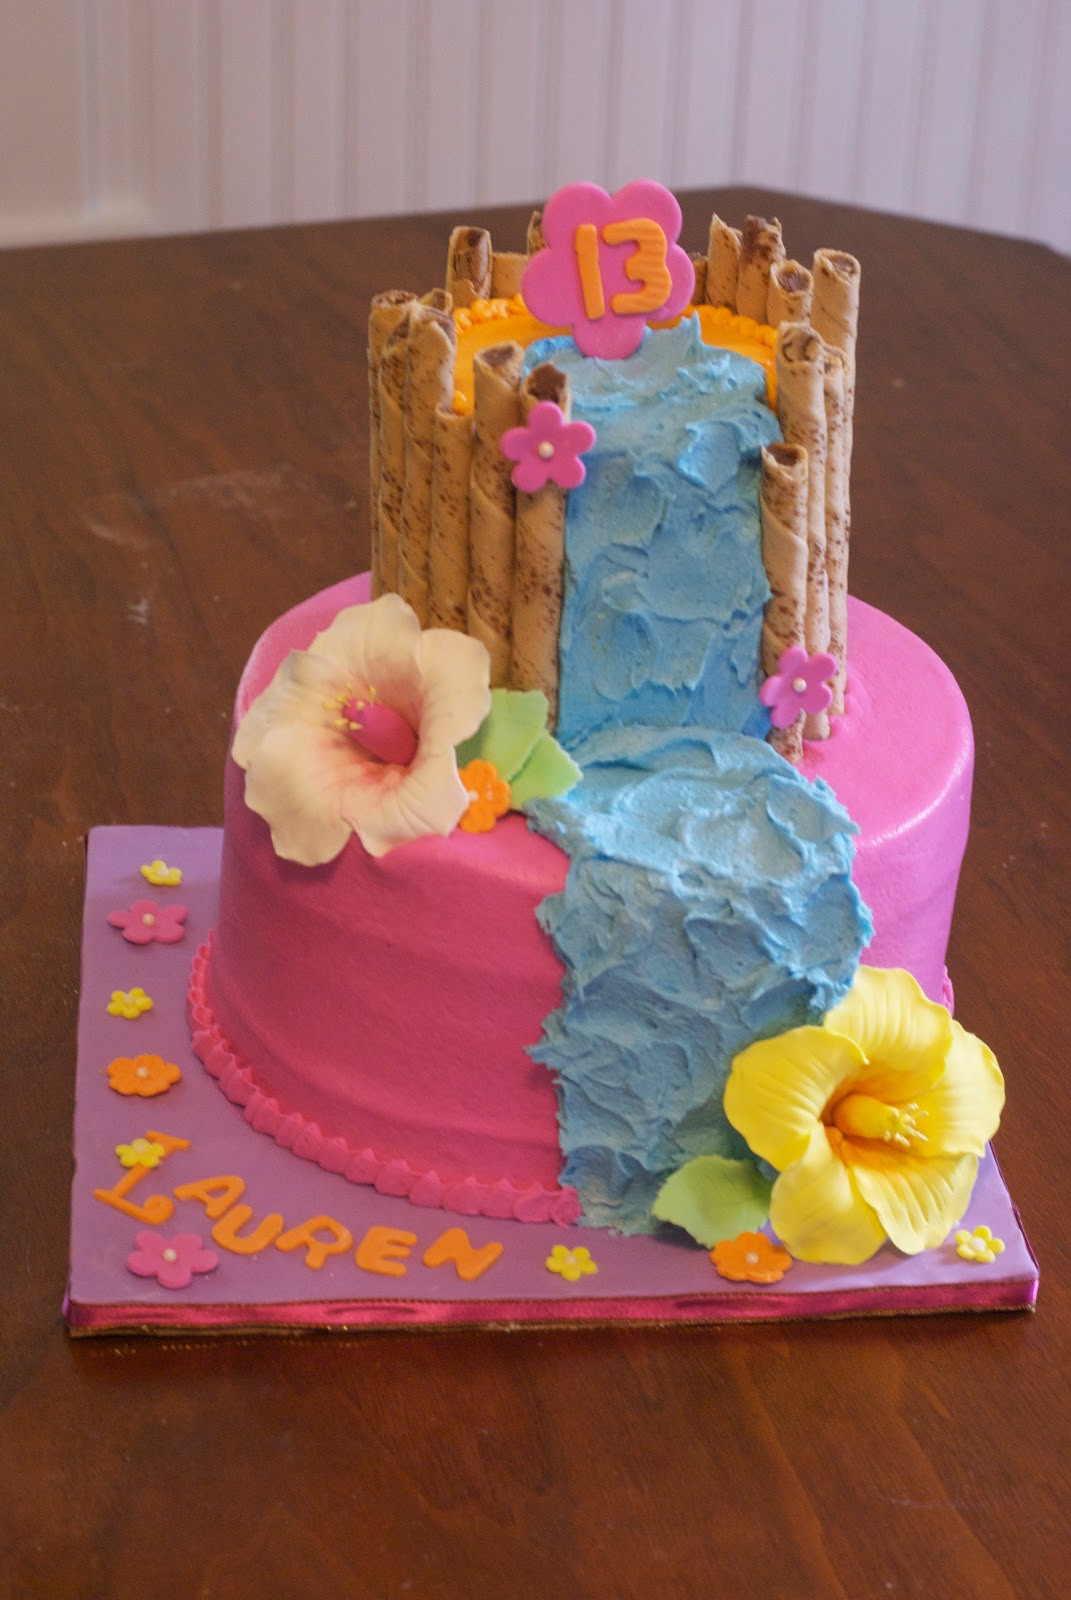 Best ideas about Hawaiian Birthday Cake
. Save or Pin Country Cupboard Cakes Hawaiian Birthday Cake Now.